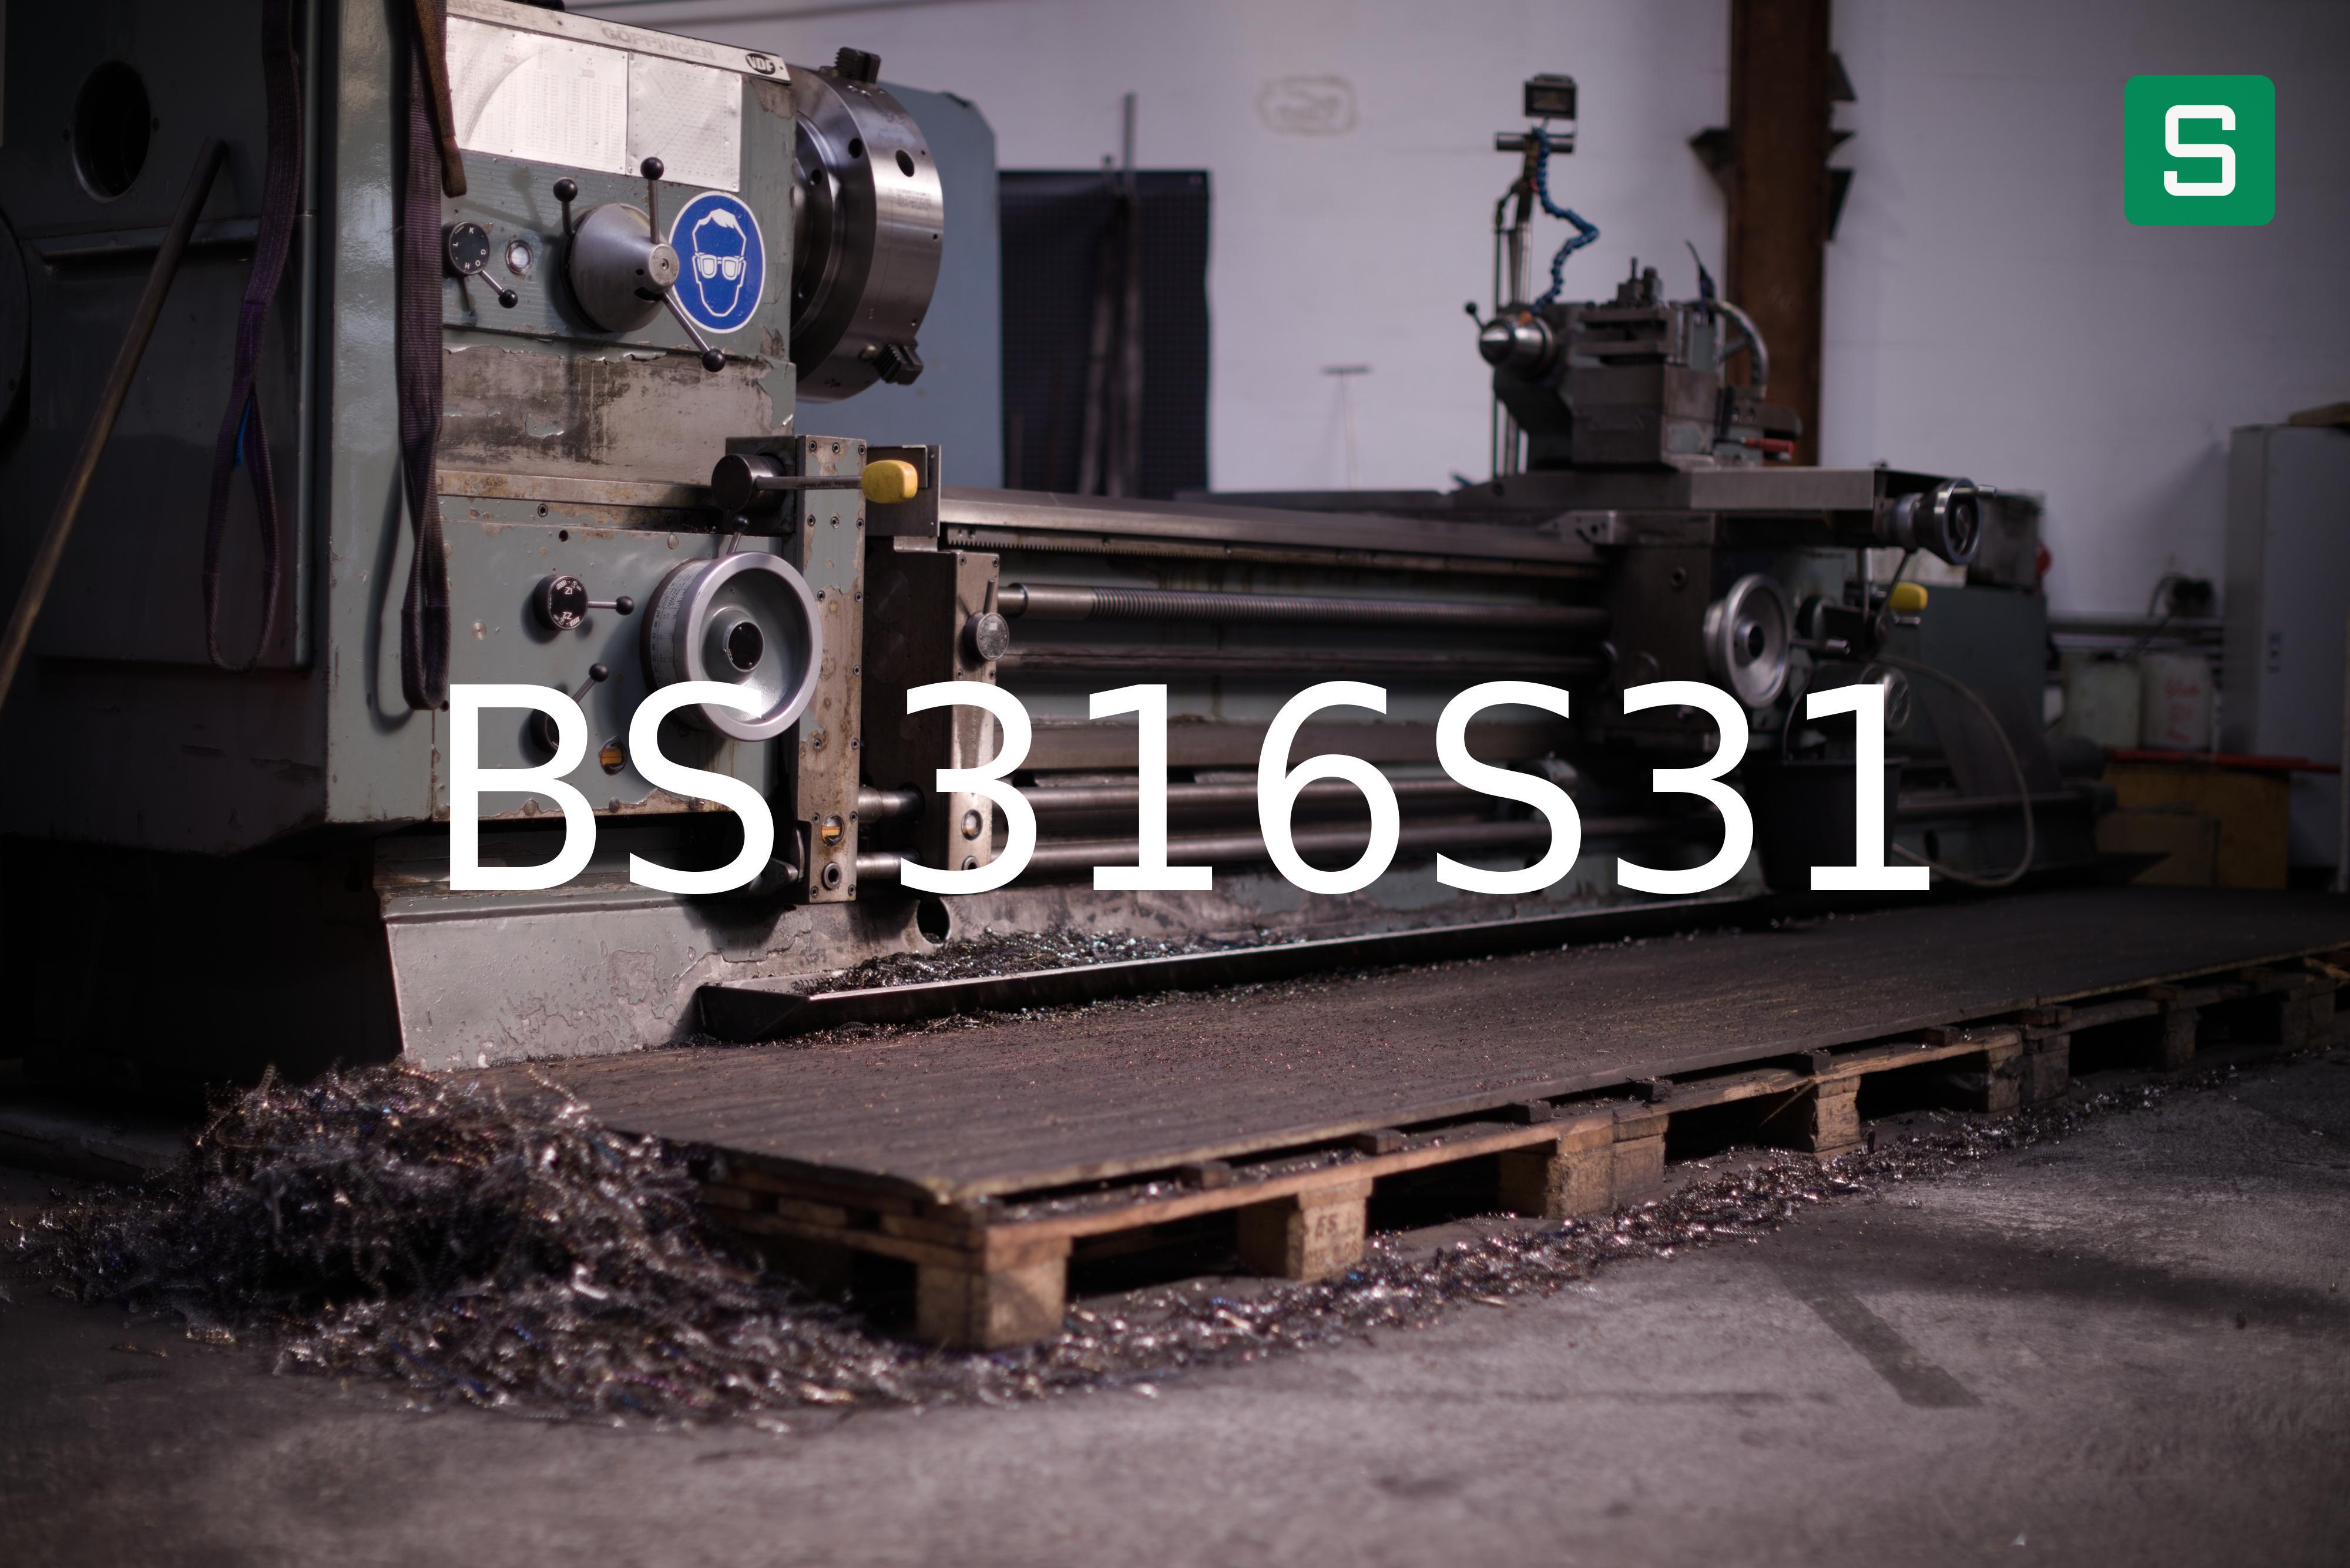 Steel Material: BS 316S31